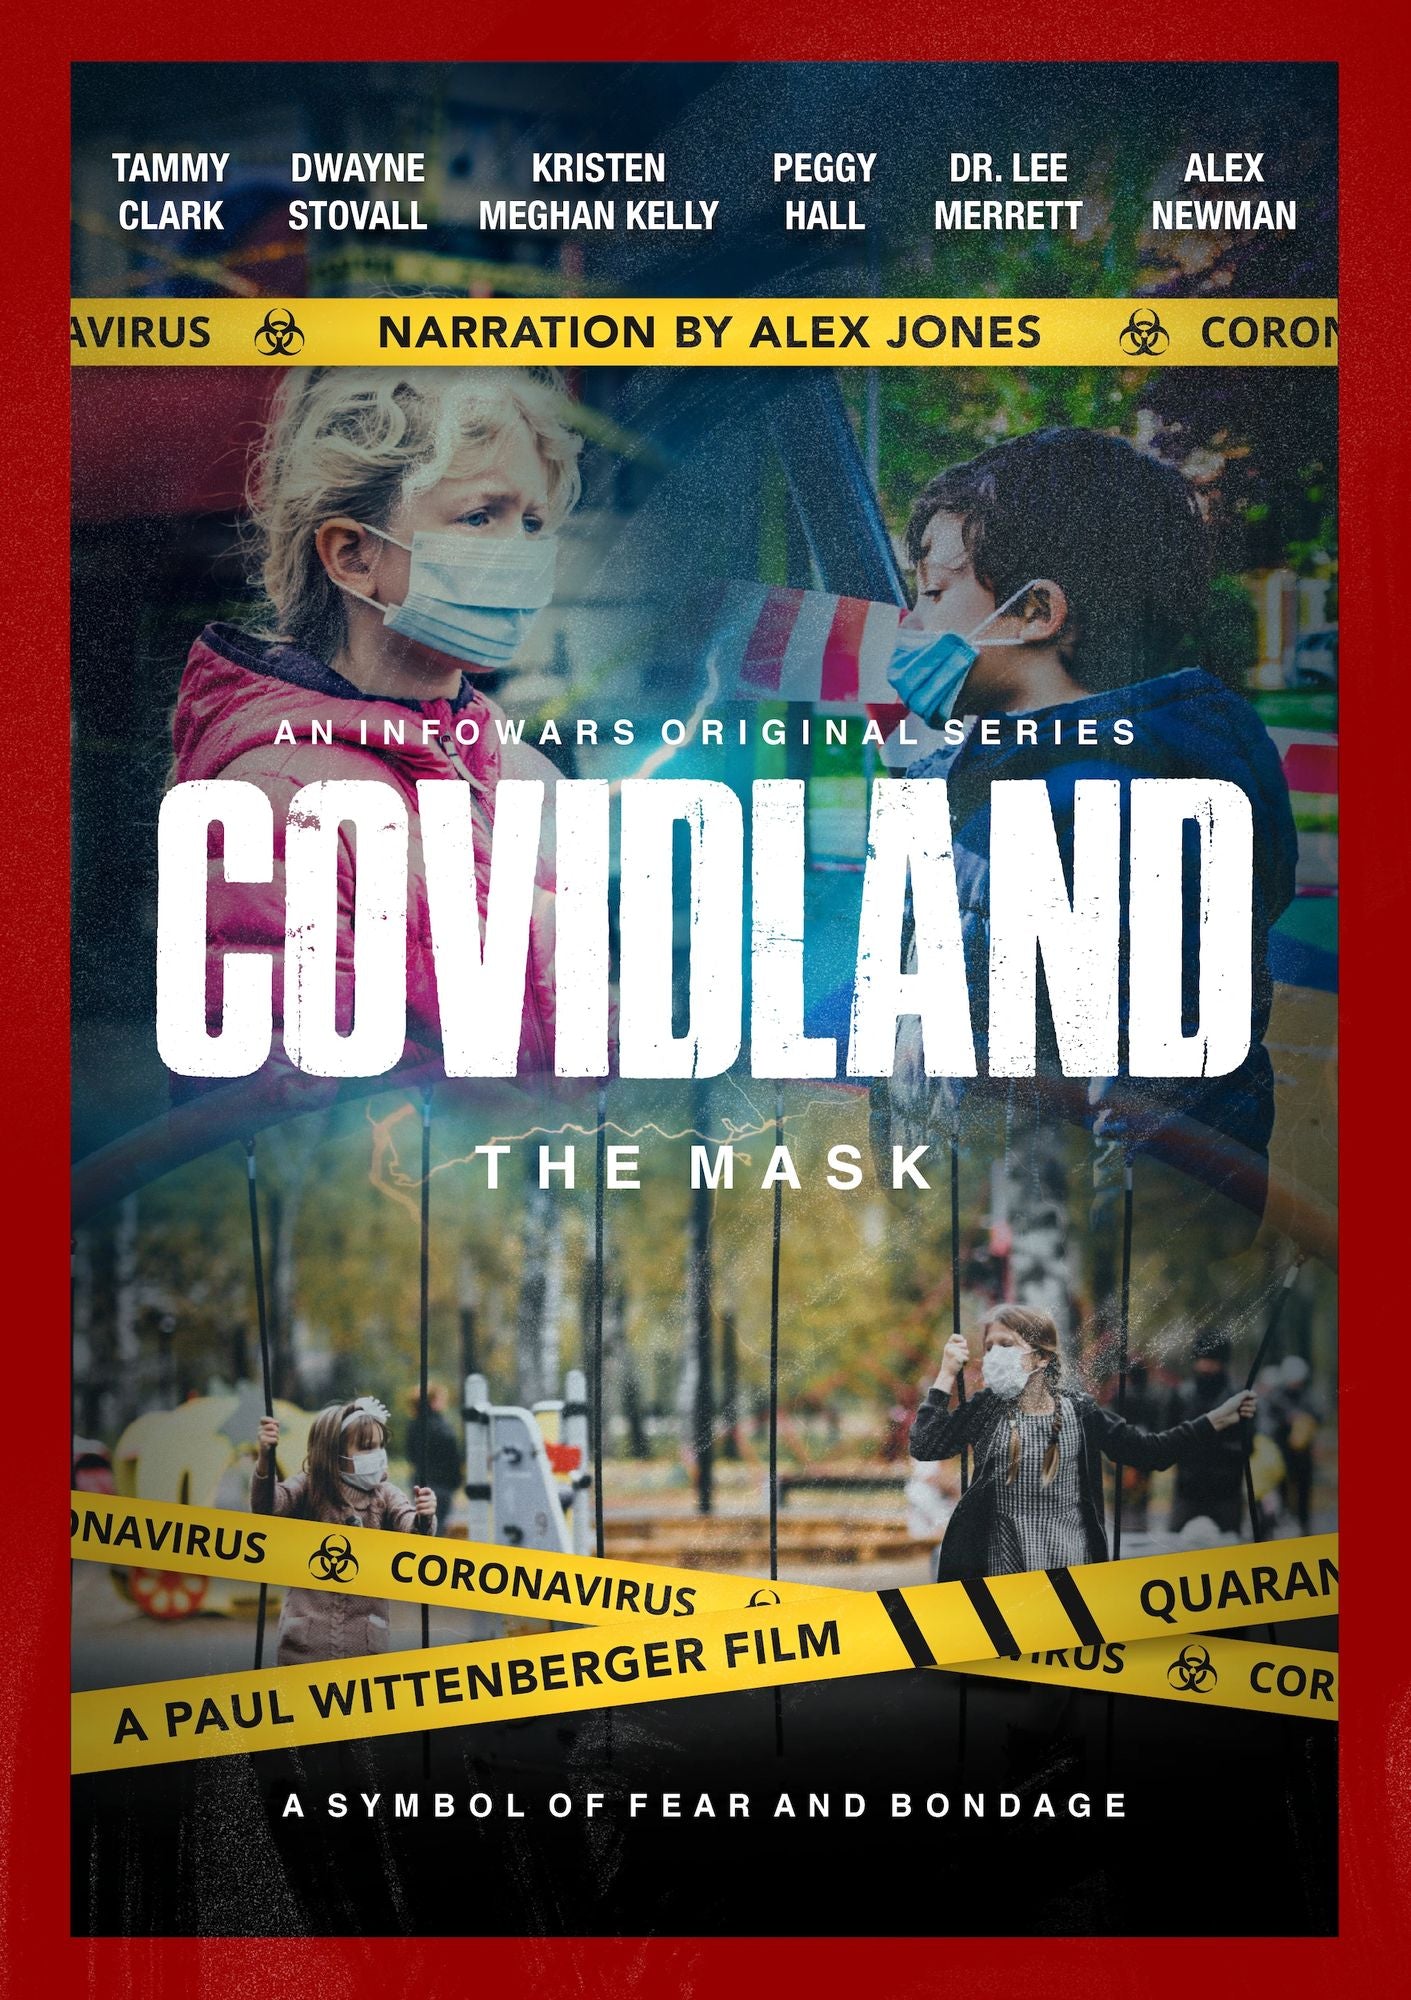 COVIDLAND (DVD): THE MASK (EPISODE 2)